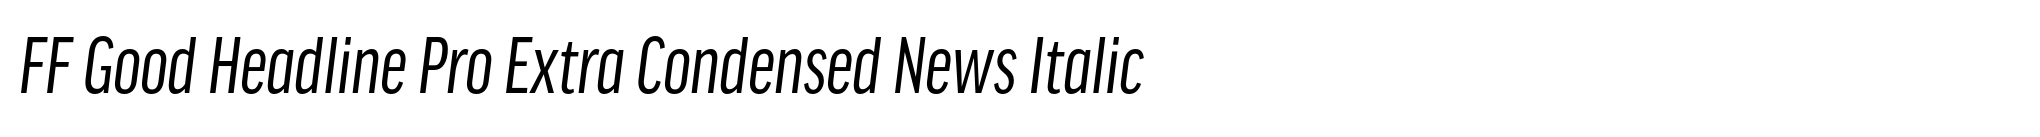 FF Good Headline Pro Extra Condensed News Italic image